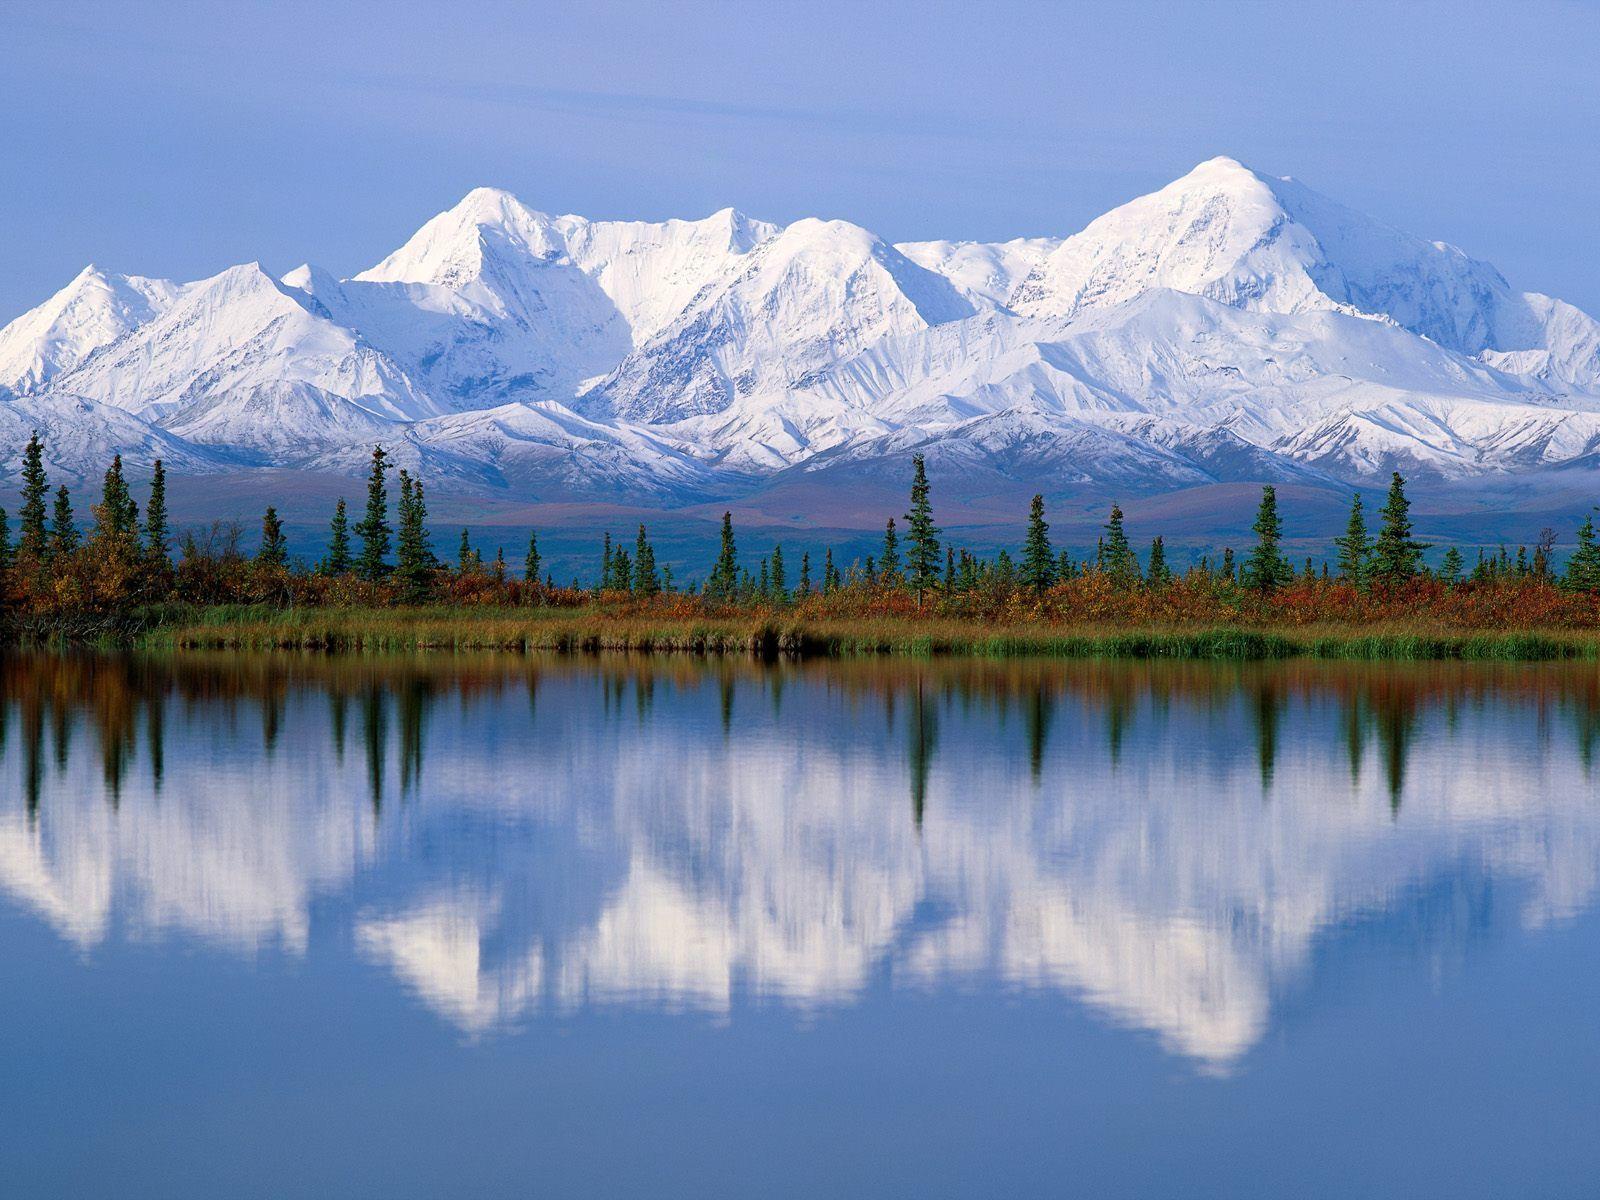 Denali National Park Alaska Image. Wanderlust